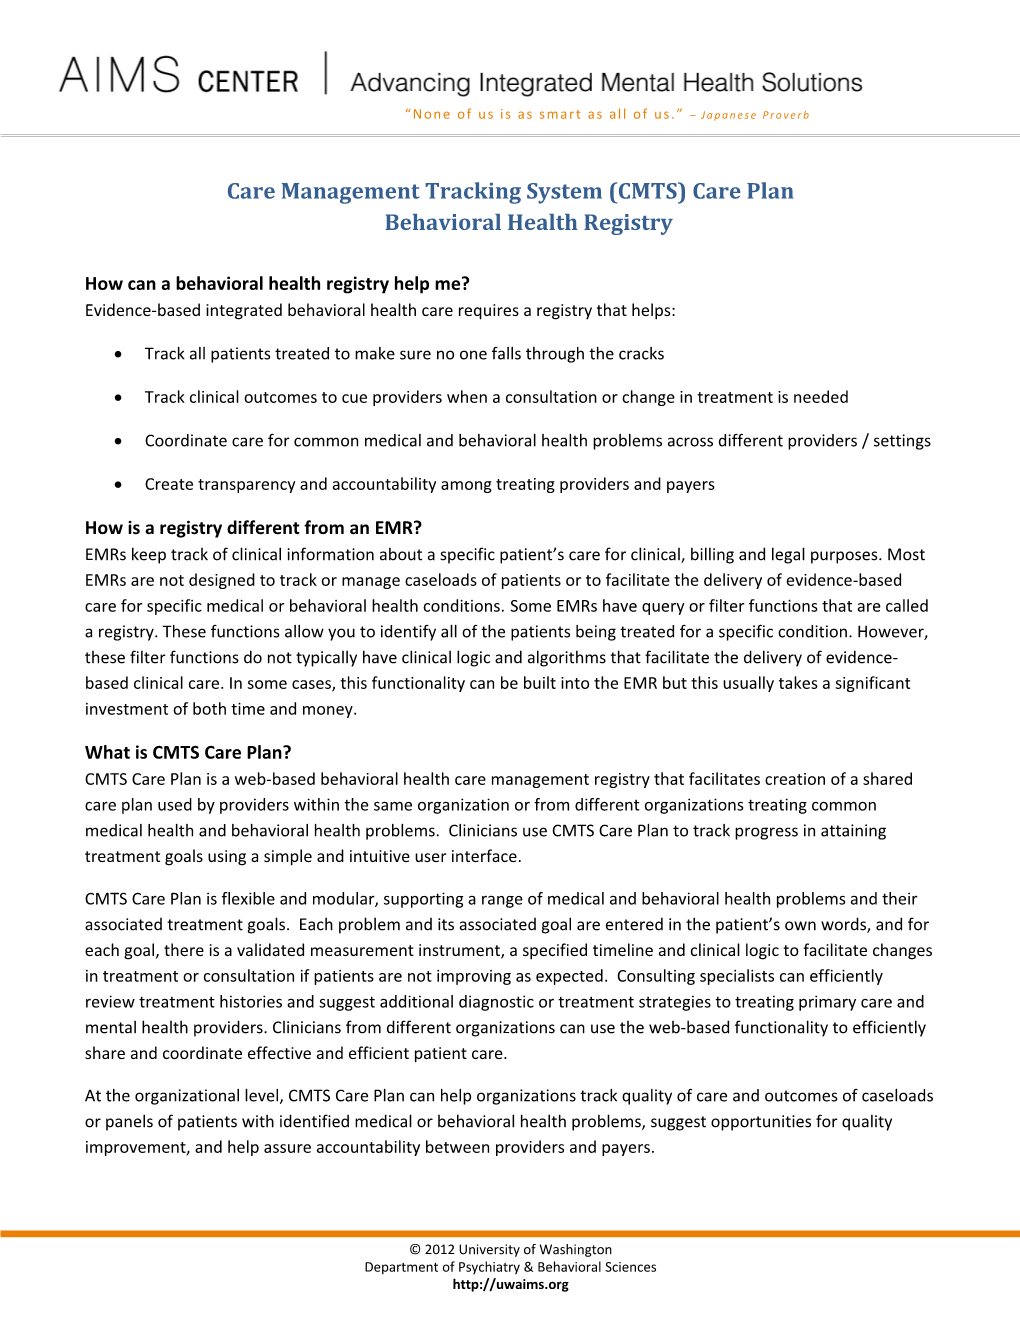 Care Management Tracking System (CMTS) Care Planbehavioral Health Registry